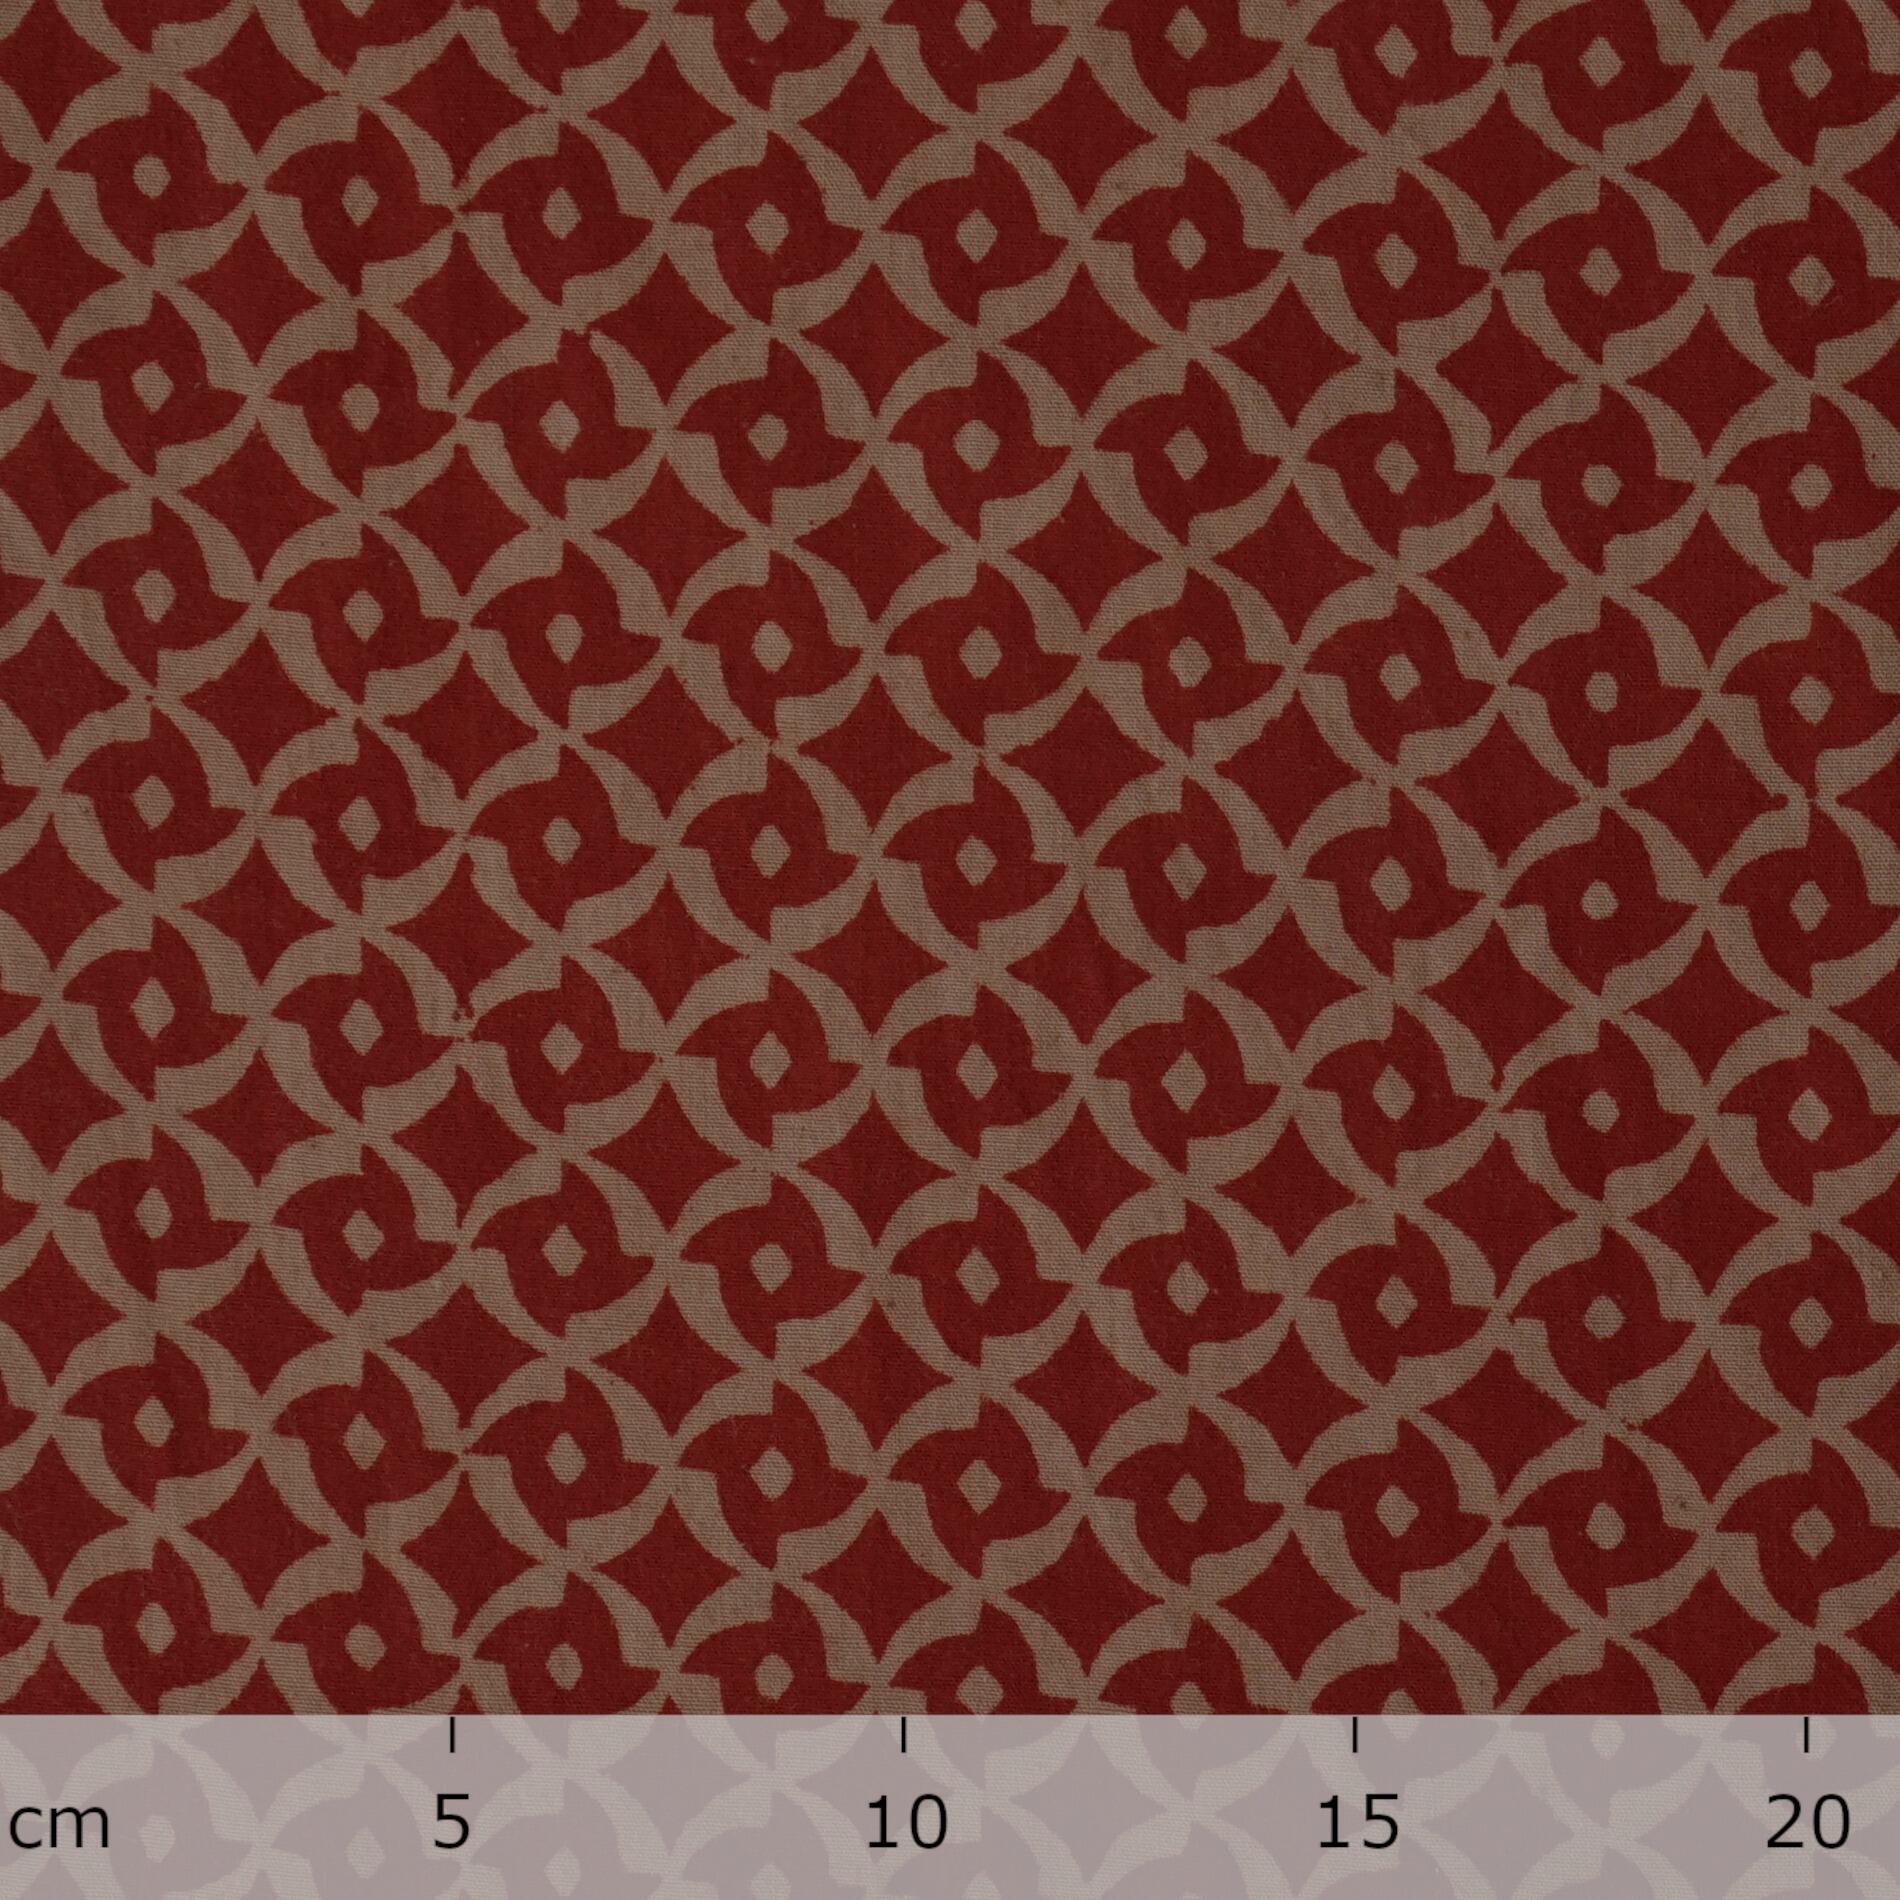 100% Block-Printed Cotton Fabric From India- Bagh - Alizarin Red & Indigosol Khaki - Wurfstern Origami Print - Ruler